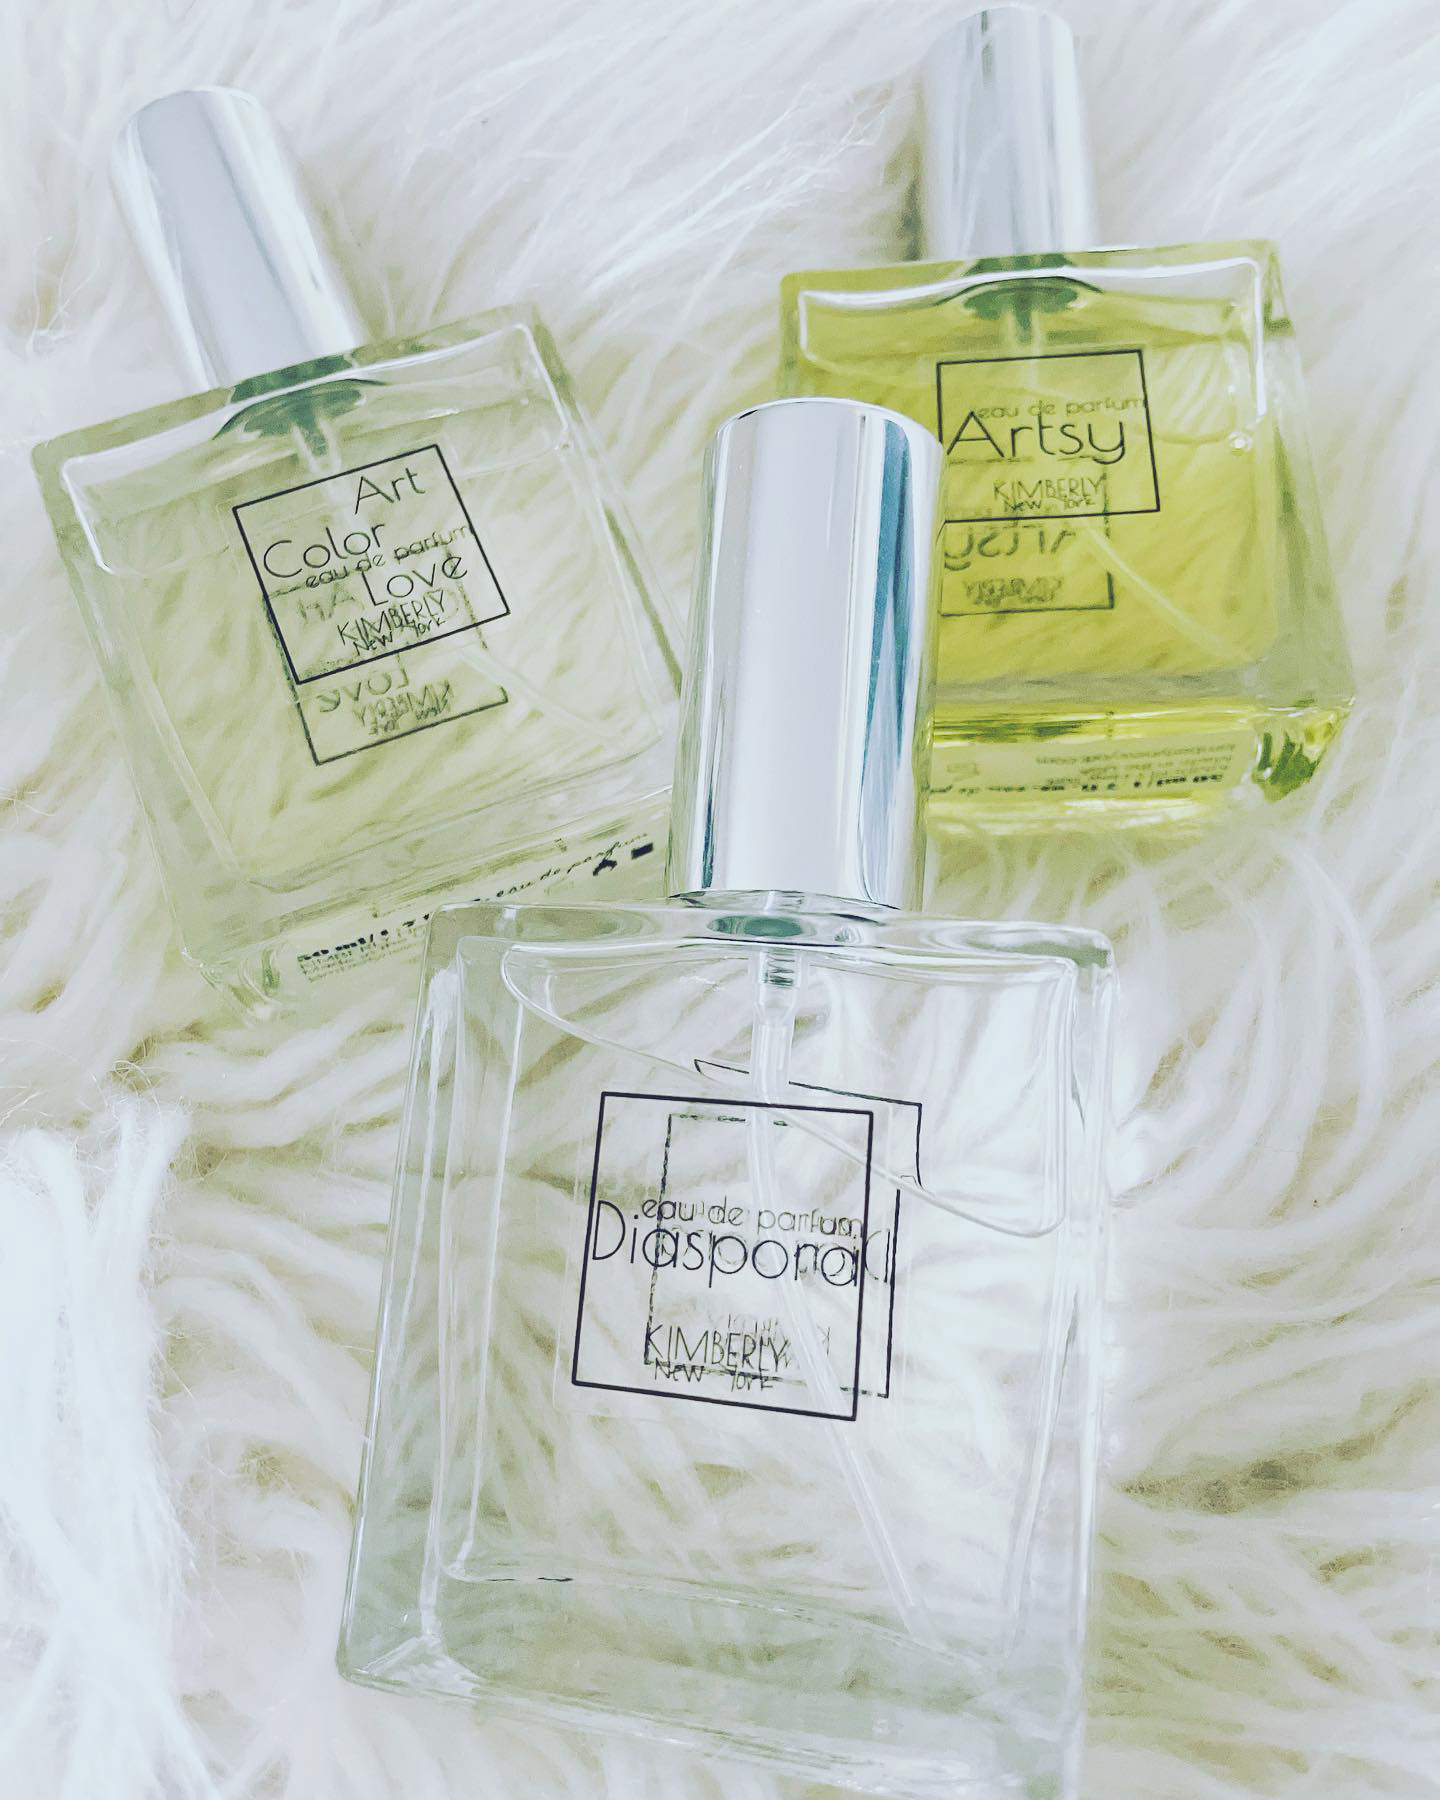 Kimberly New York fragrances